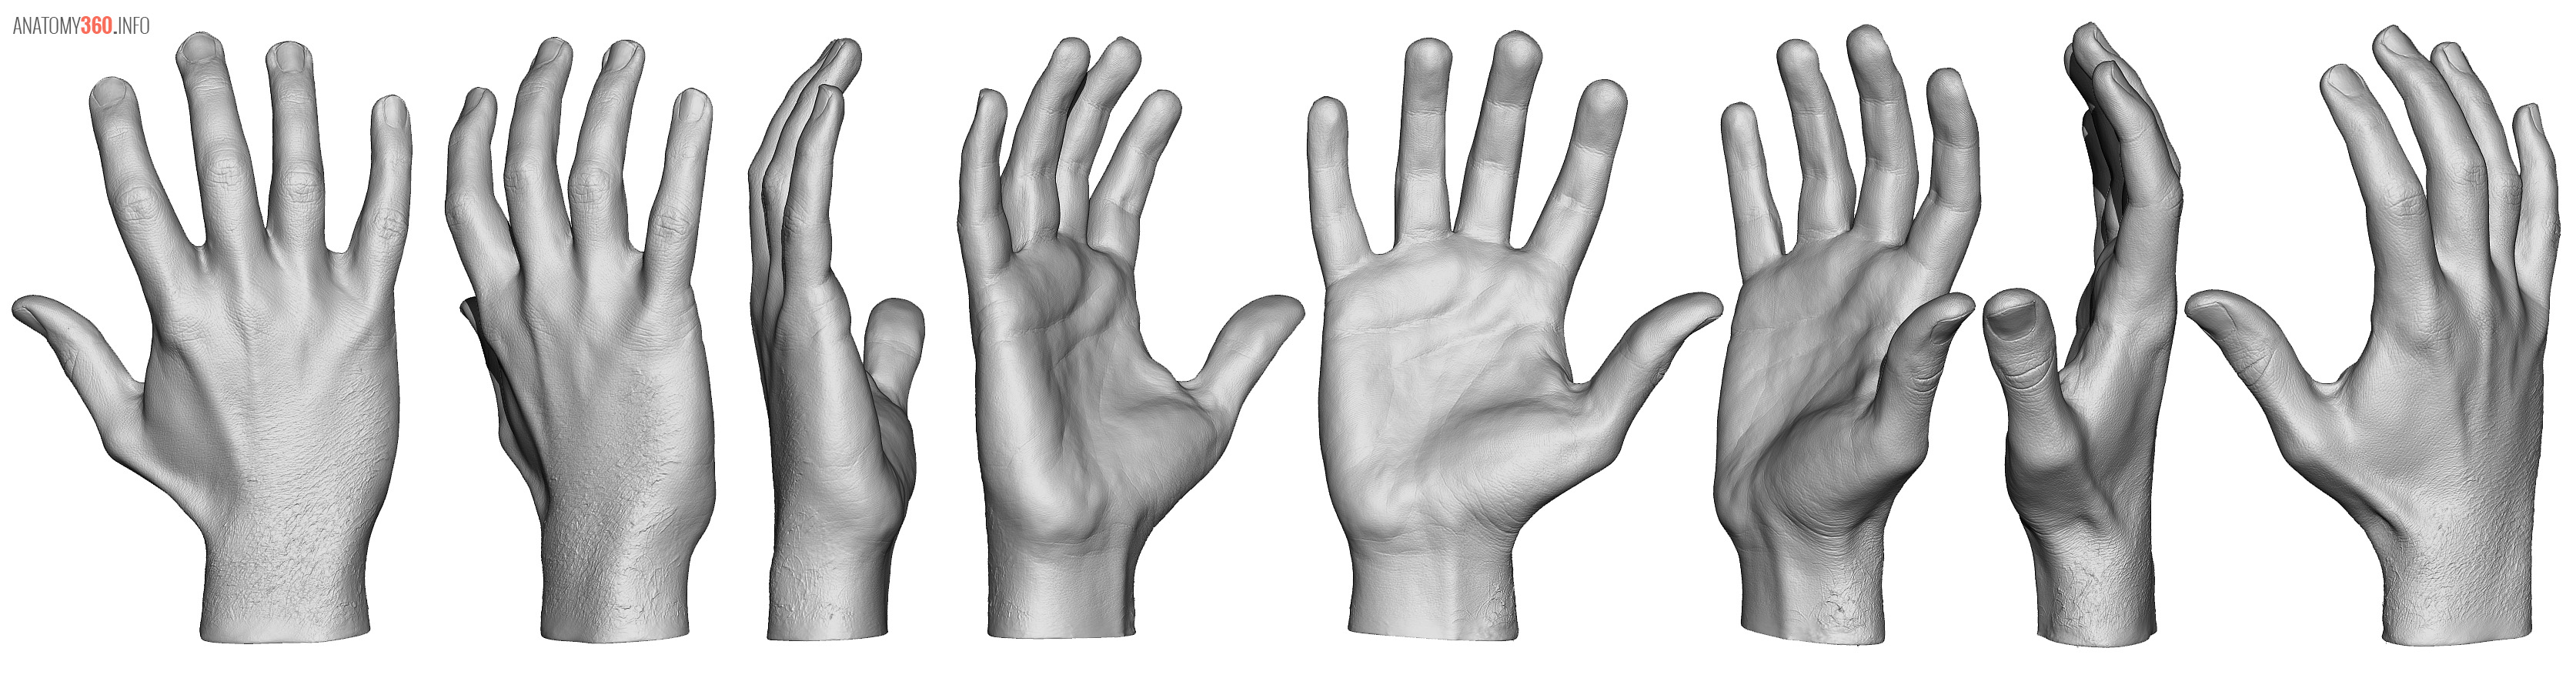 Hand Reference | Anatomy 360